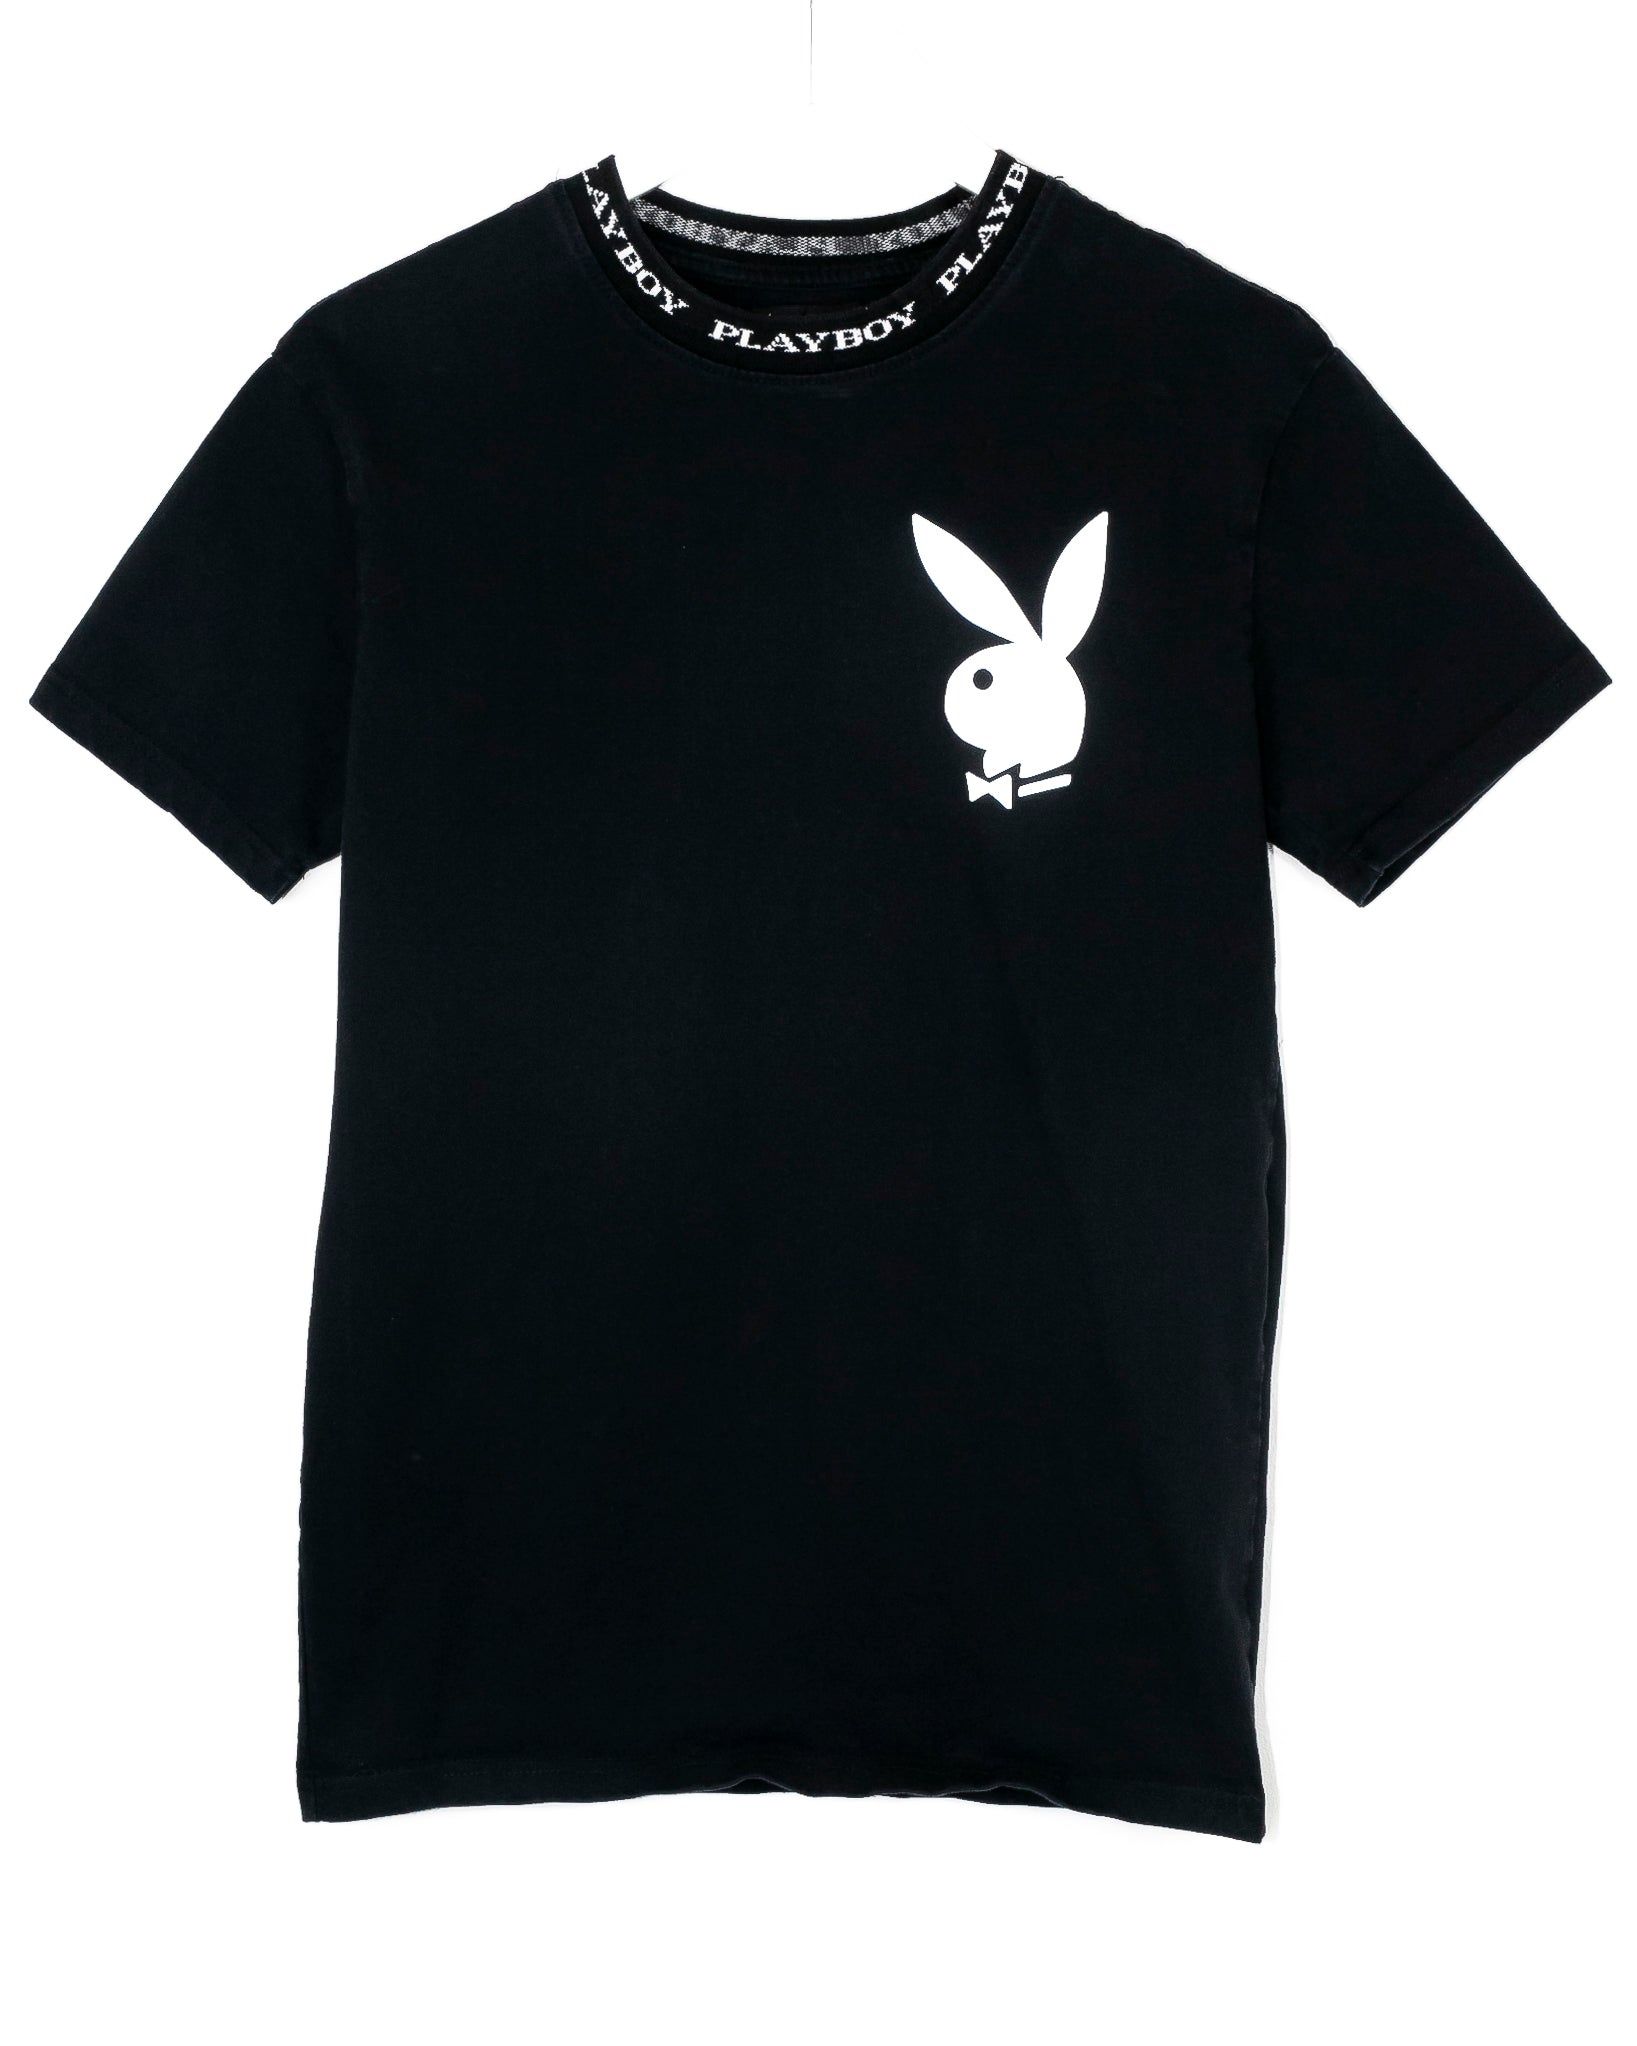 Vintage Playboy T-shirt (M/L)